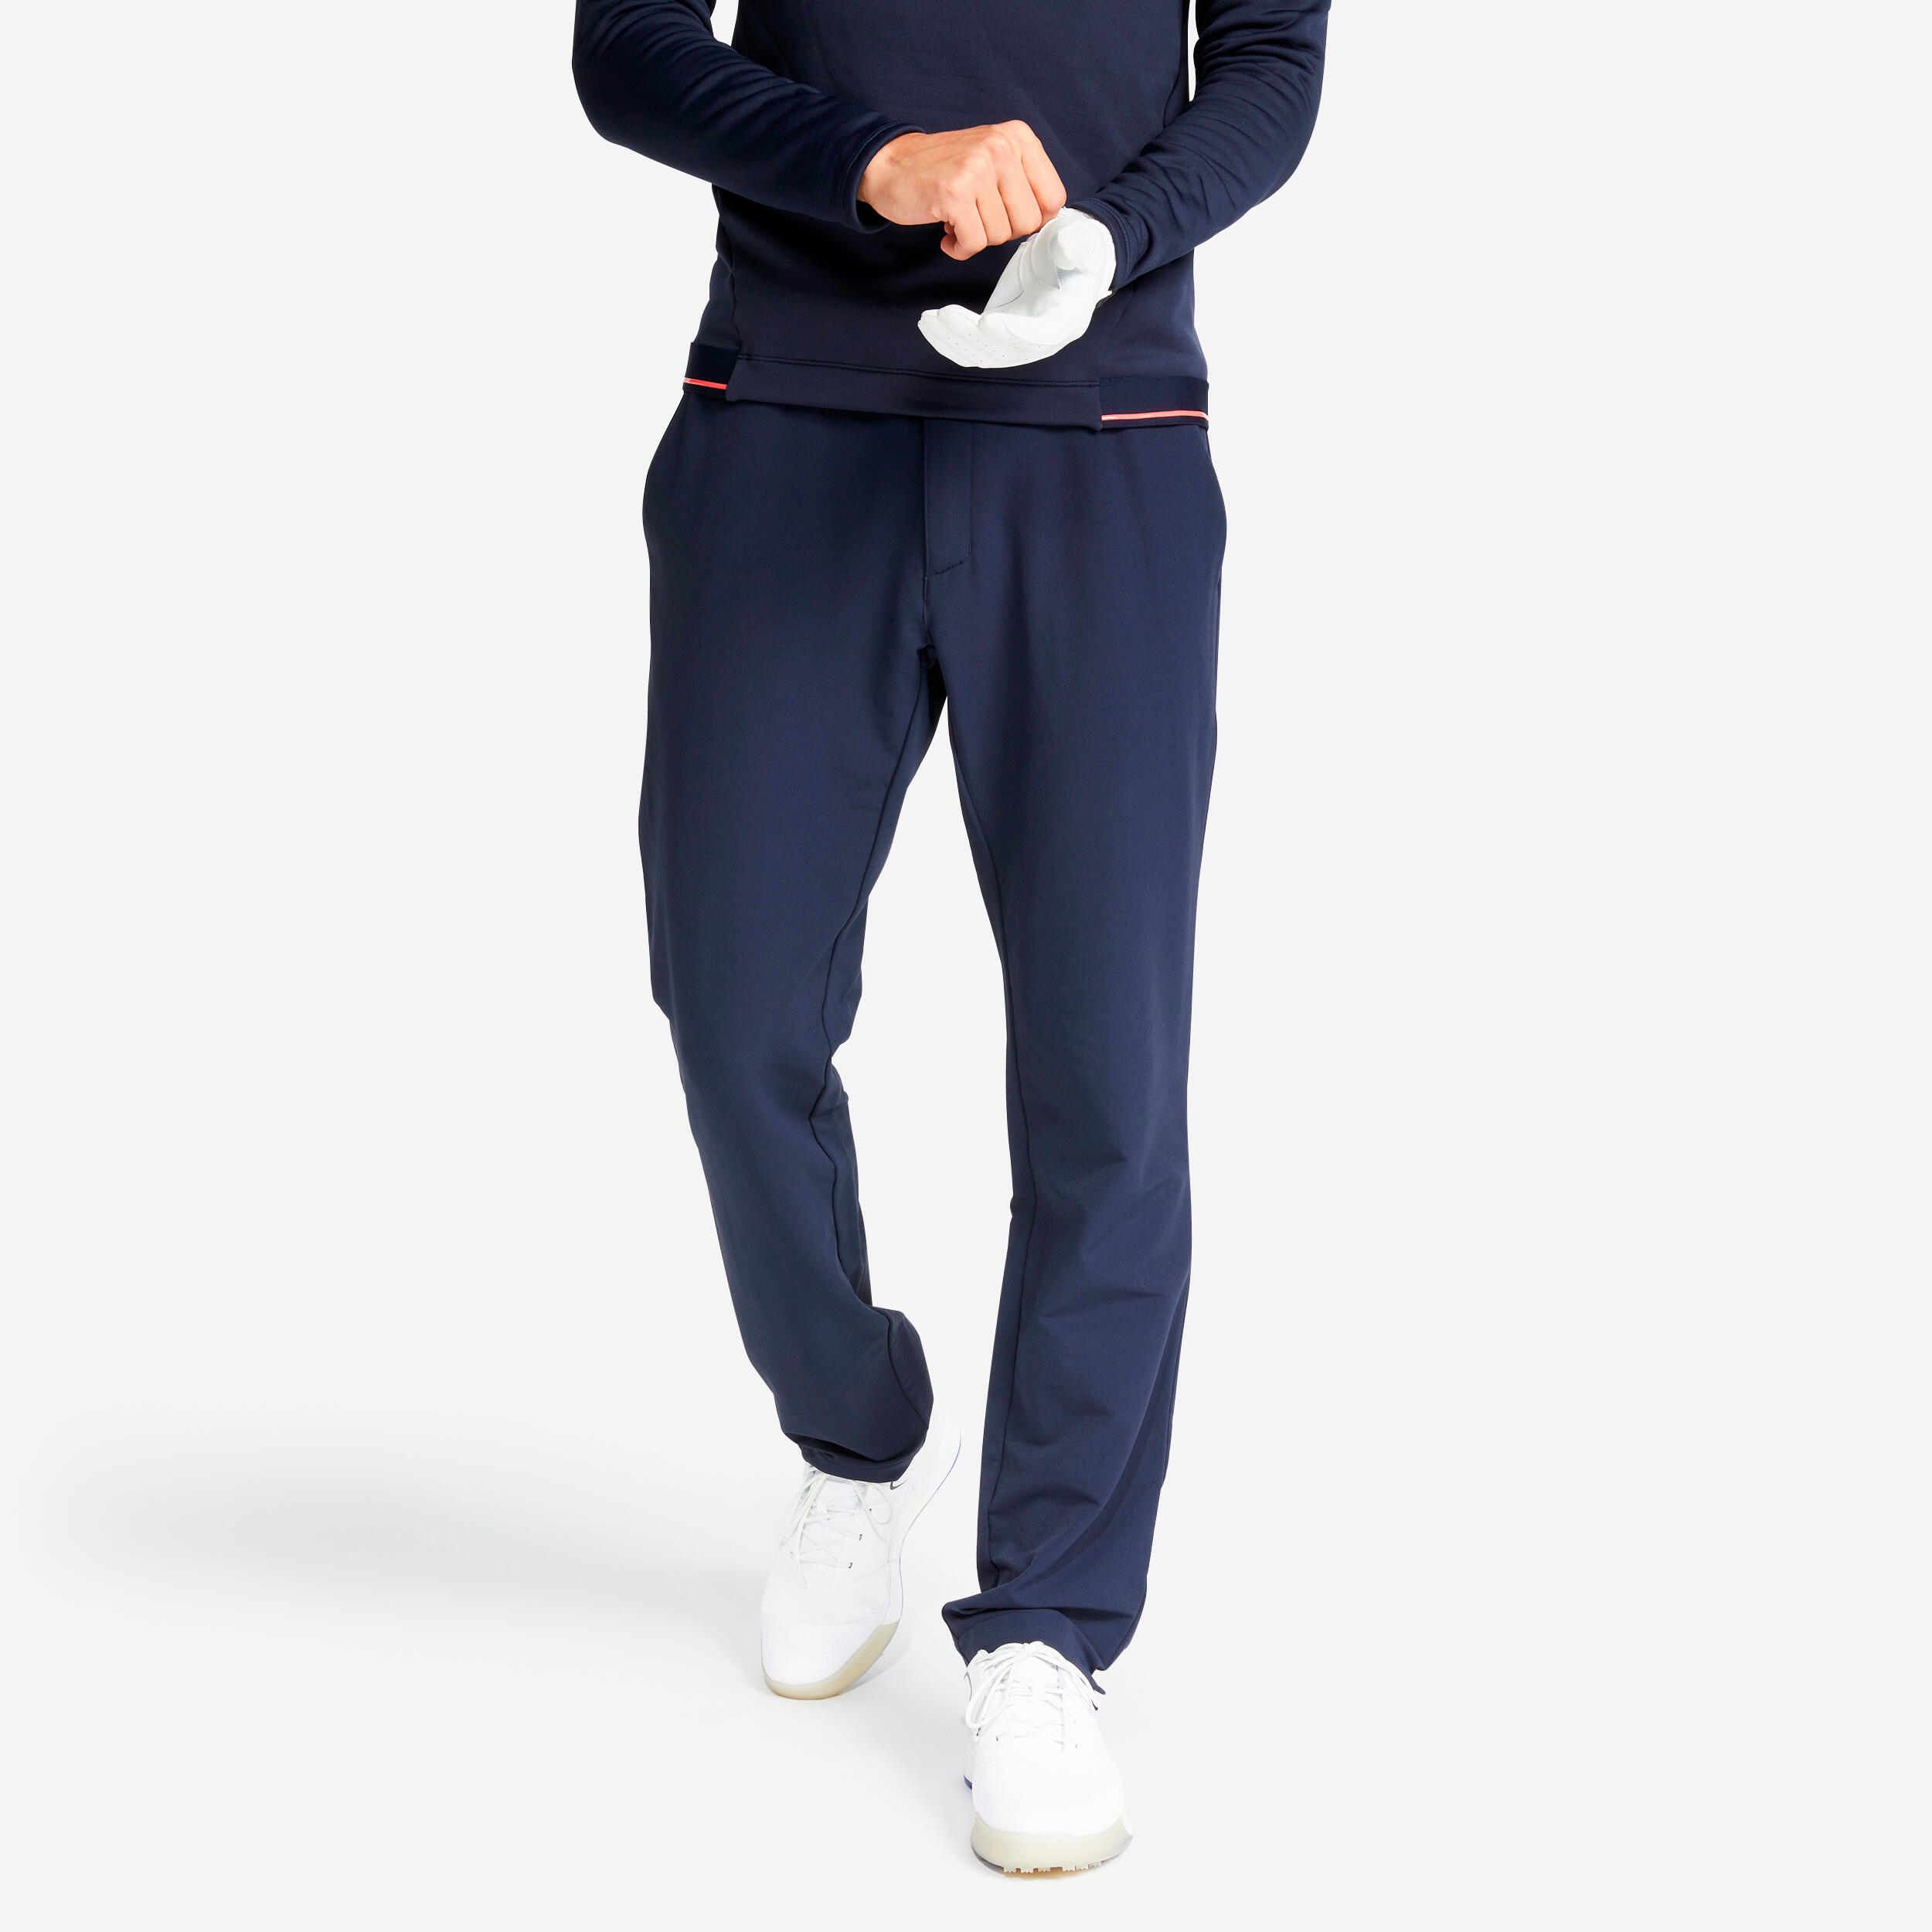 INESIS Decathlon - Pantaloni invernali golf uomo 500 blu -